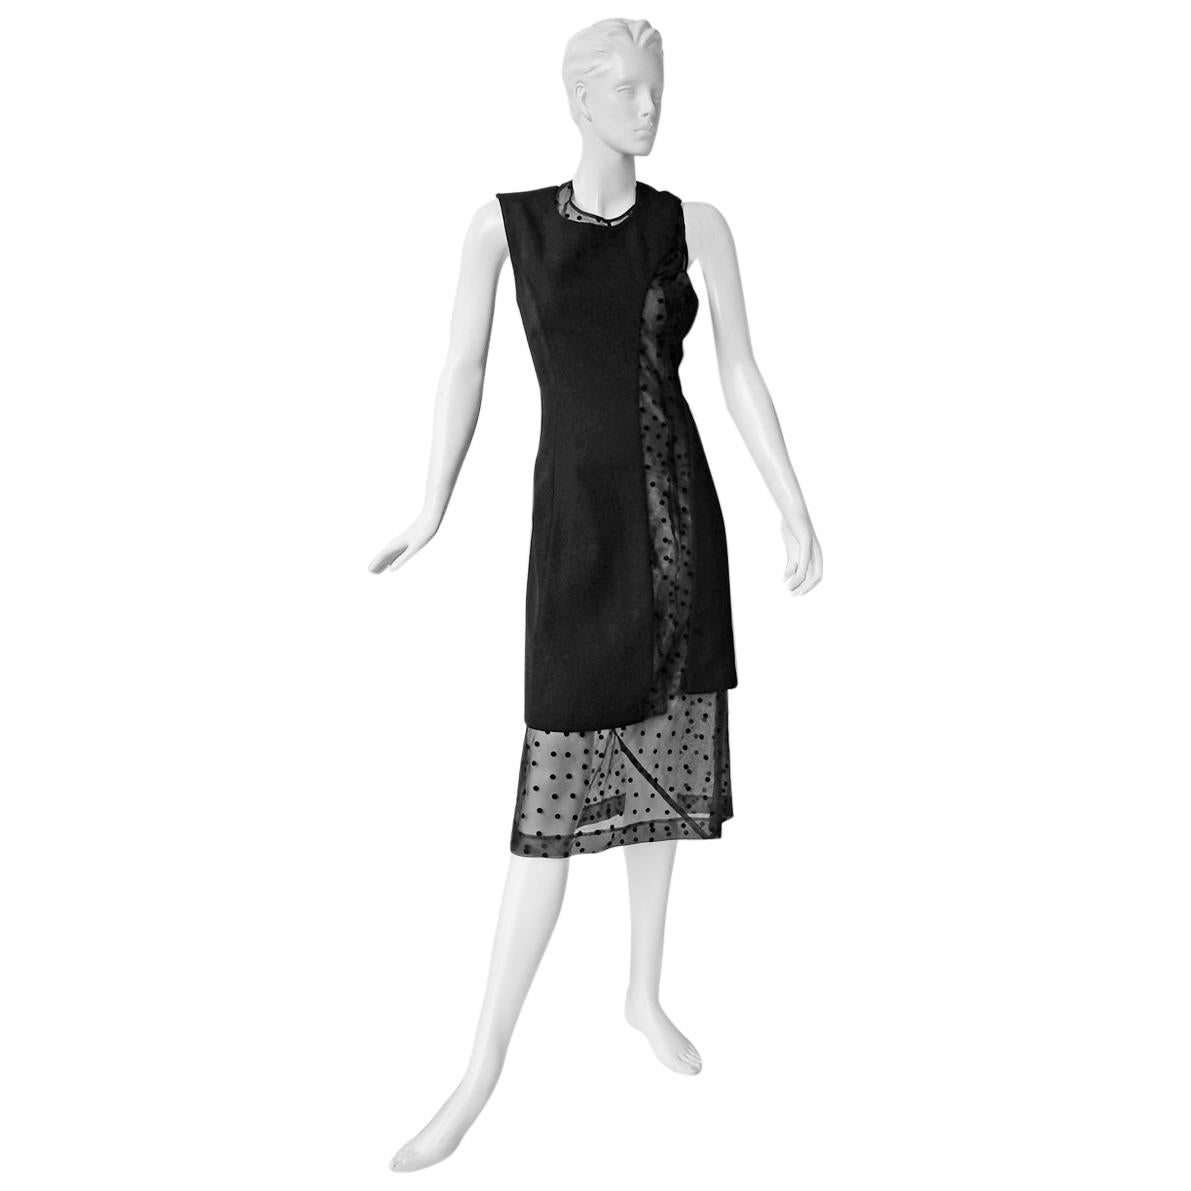 New 1997 Comme des Garcons "Rei of Light" Polkadot Black Dress For Sale